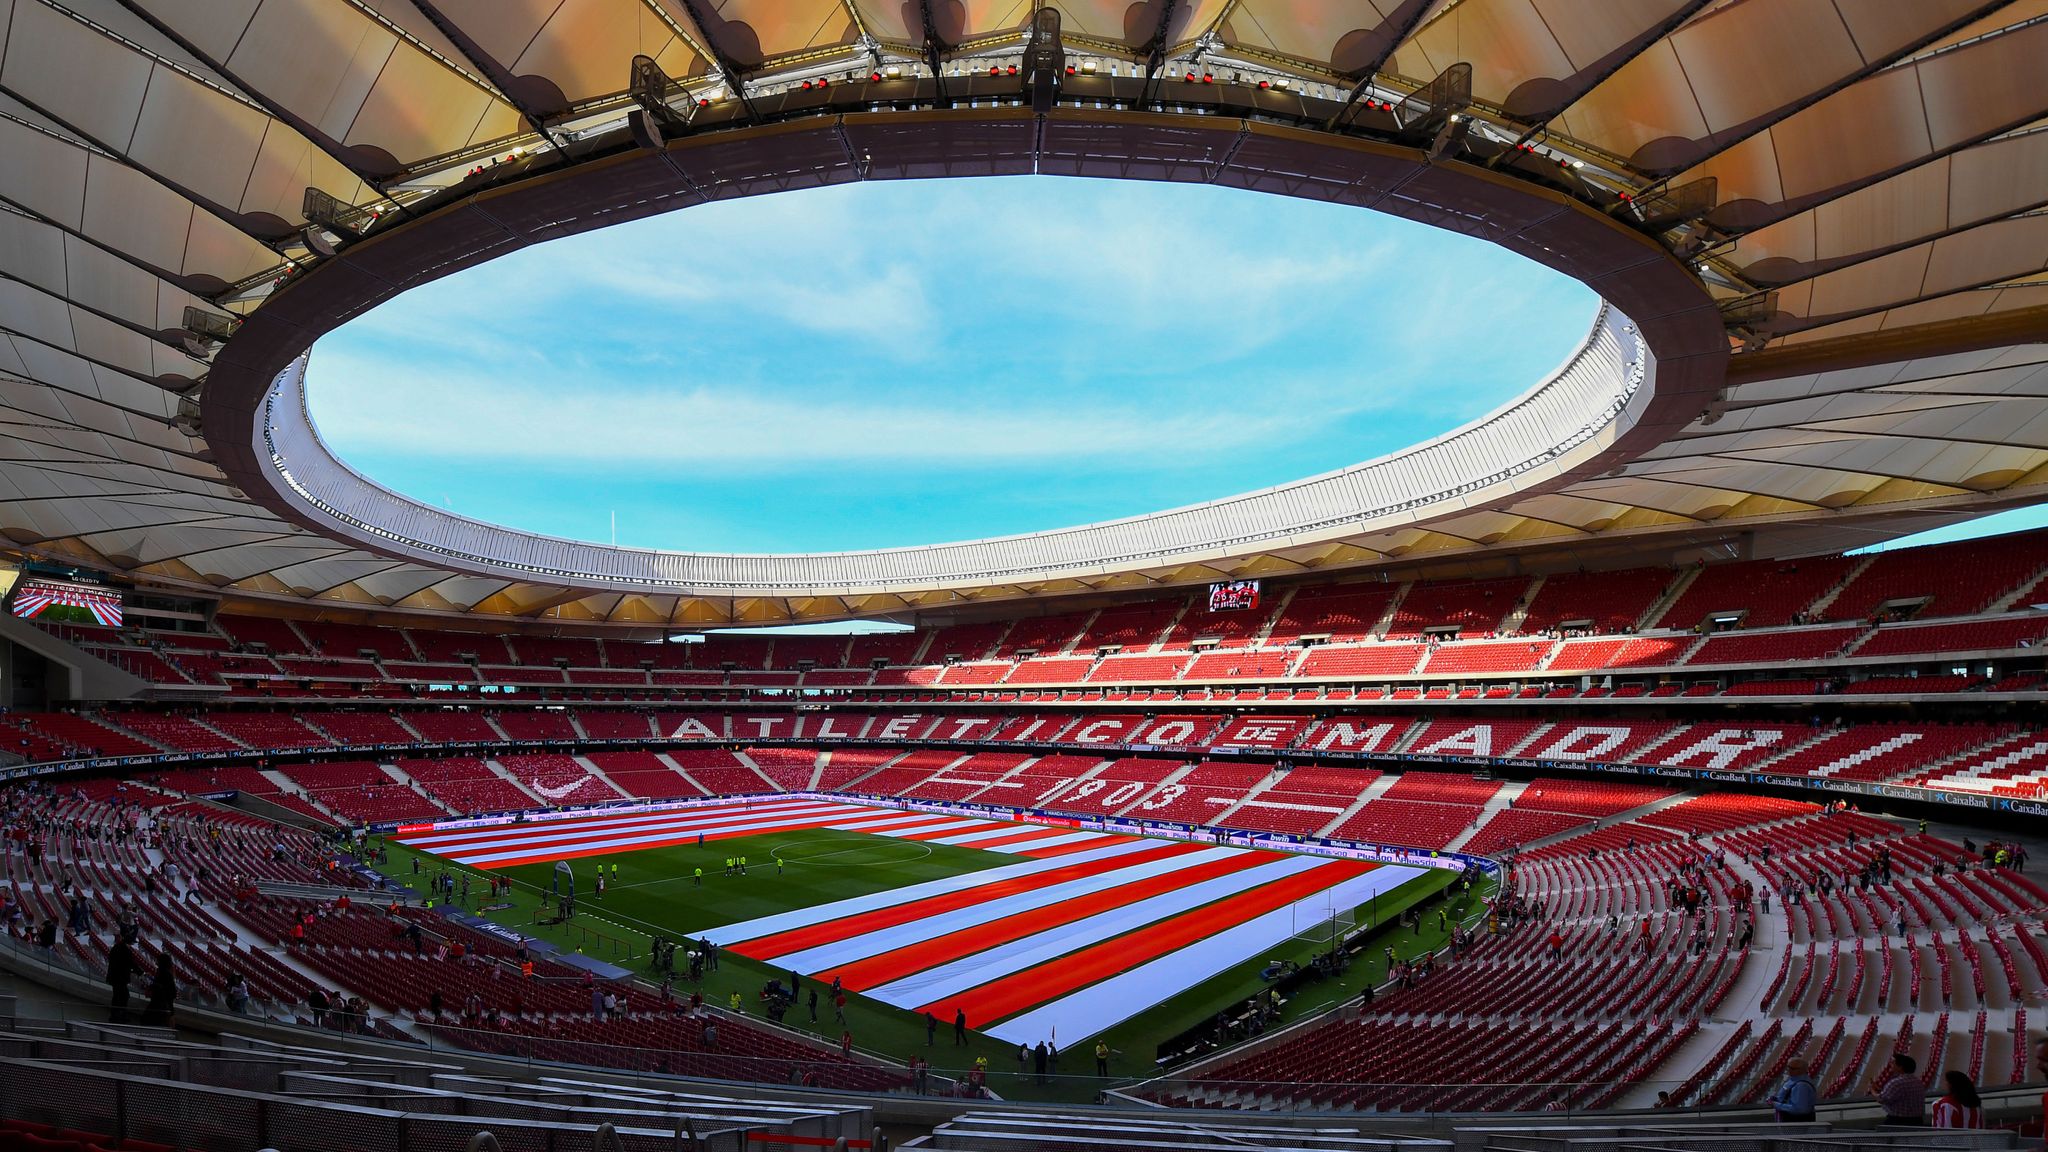 Atletico Madrid S Wanda Metropolitano Stadium To Host The 19 Champions League Final Football News Sky Sports